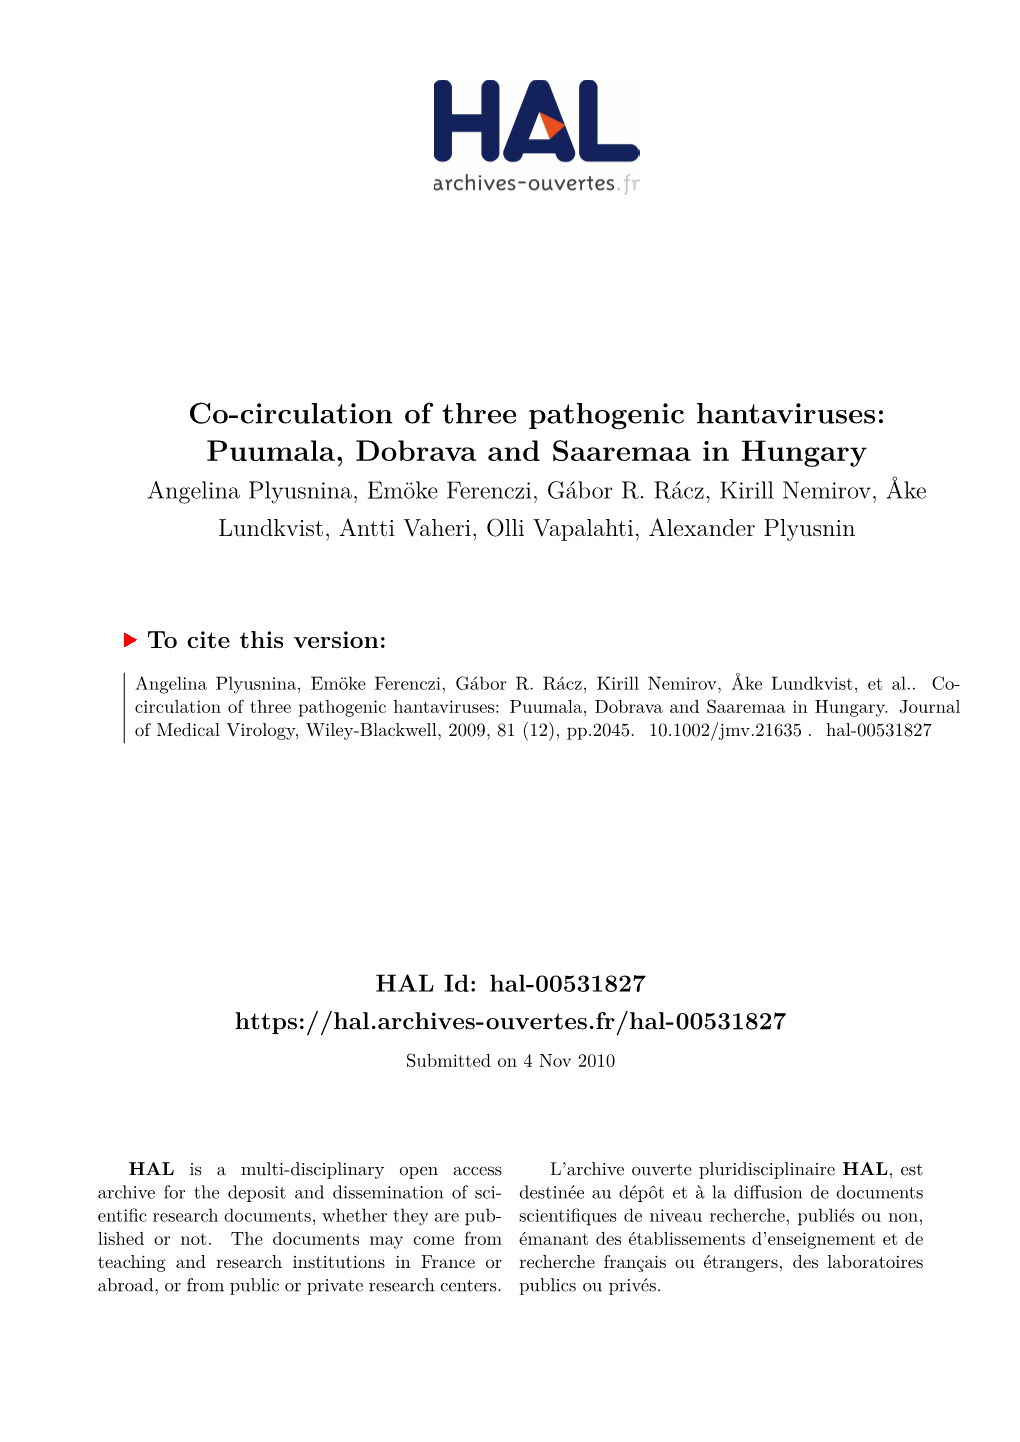 Co-Circulation of Three Pathogenic Hantaviruses: Puumala, Dobrava and Saaremaa in Hungary Angelina Plyusnina, Emöke Ferenczi, Gábor R